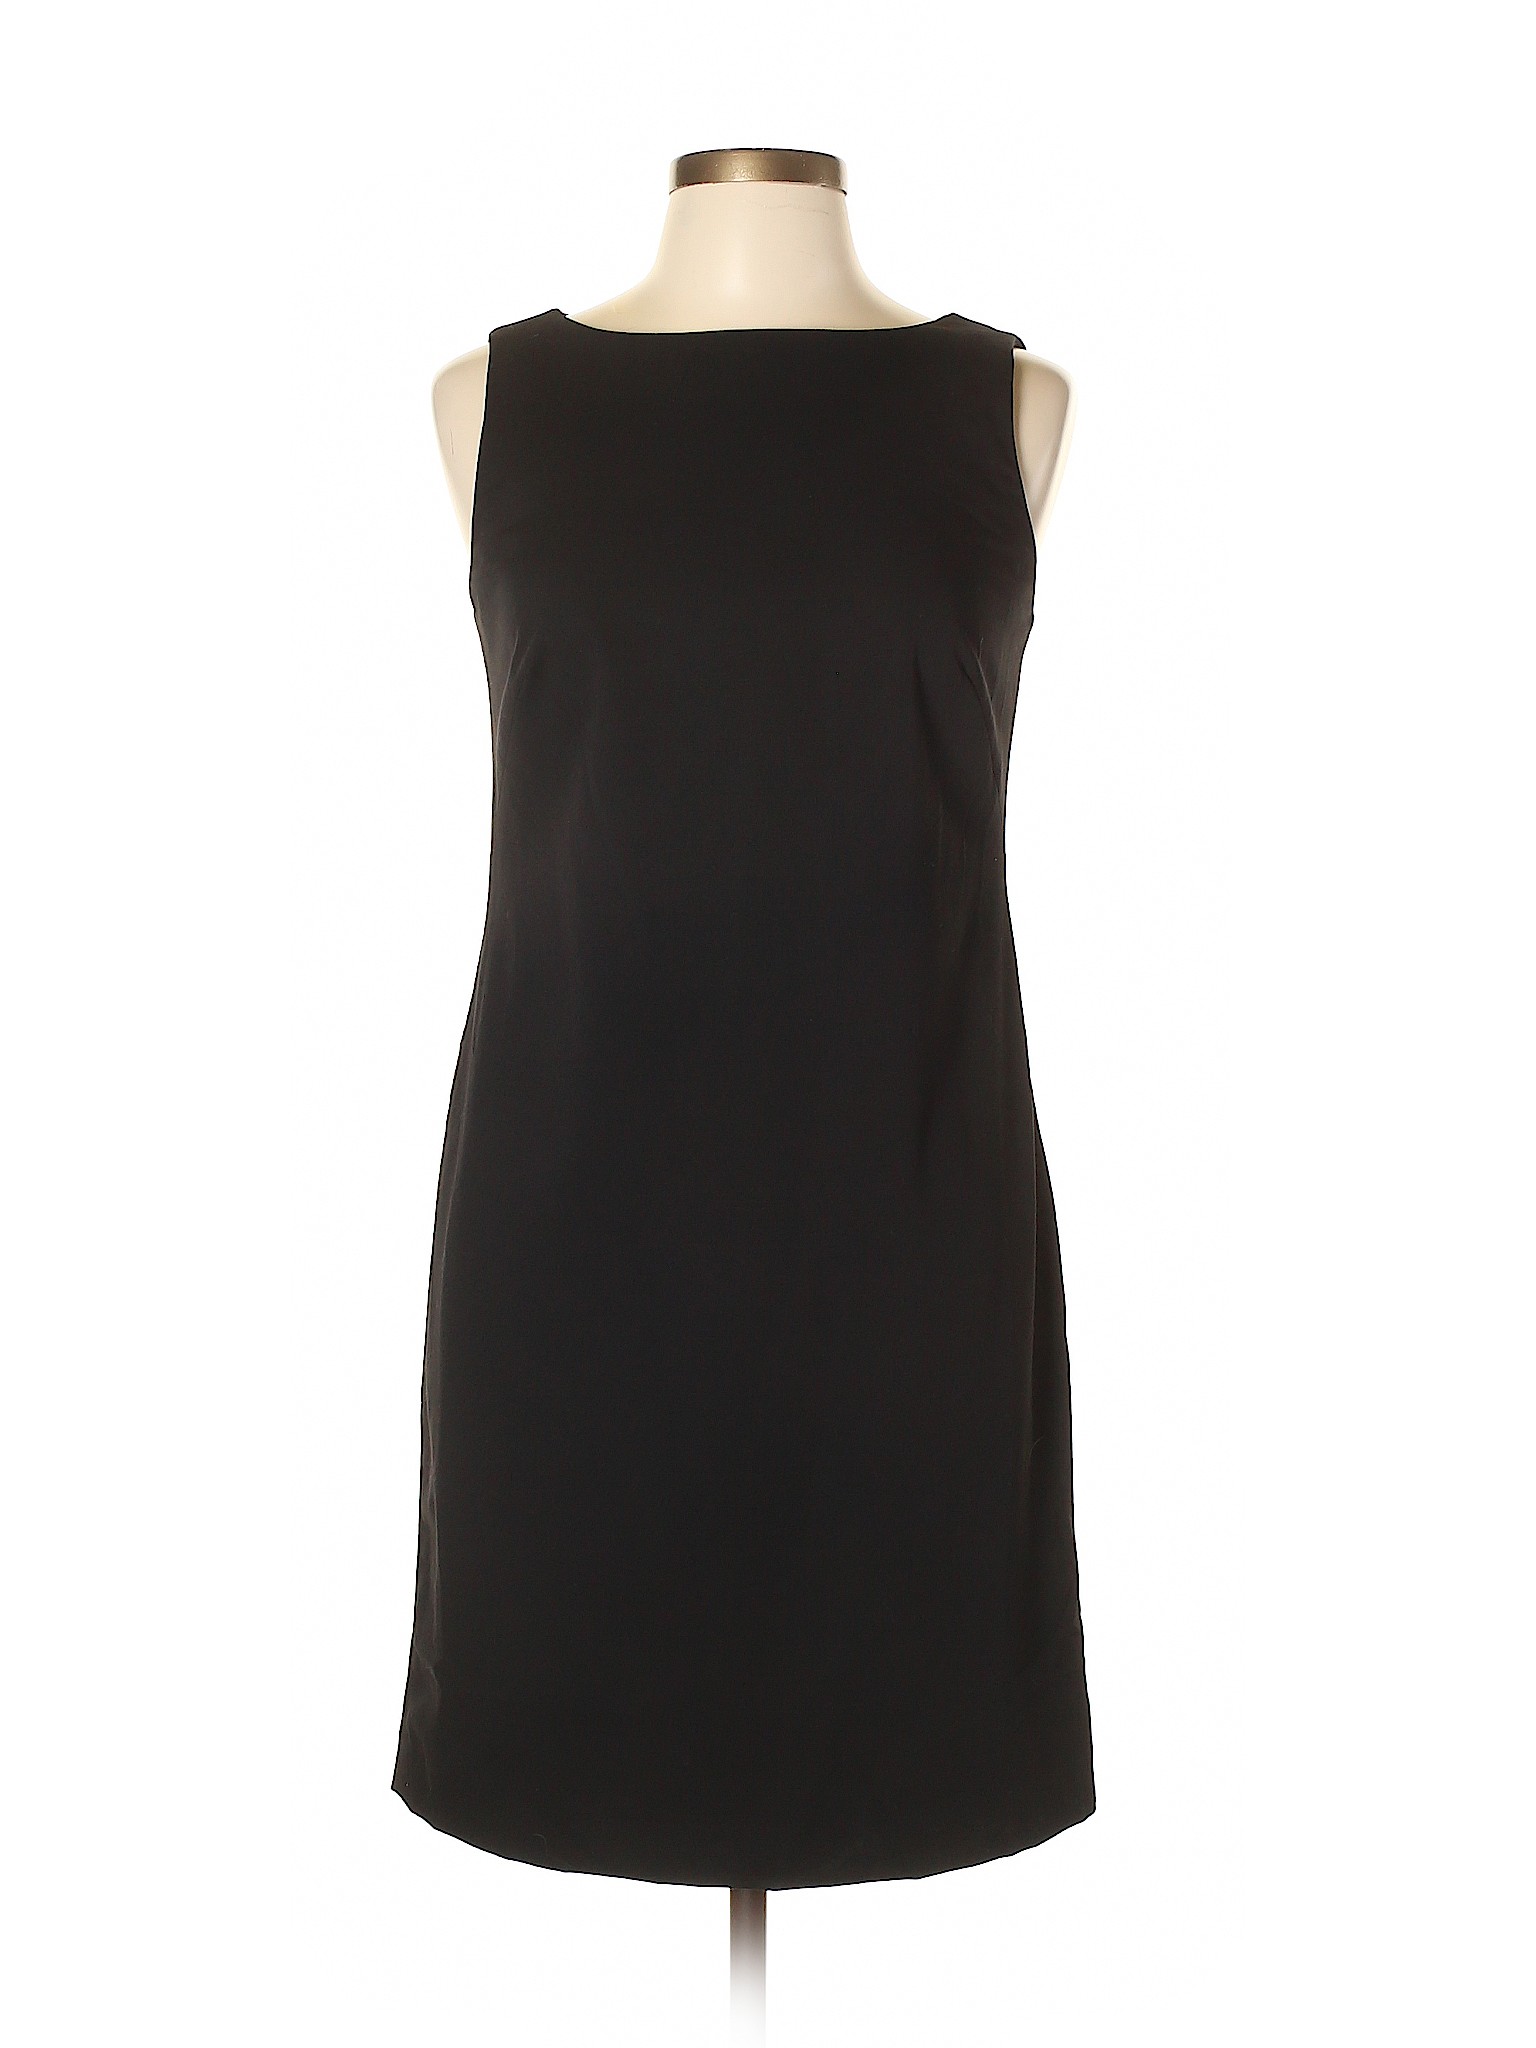 NWT Liz Claiborne Women Black Casual Dress 6 Petite | eBay